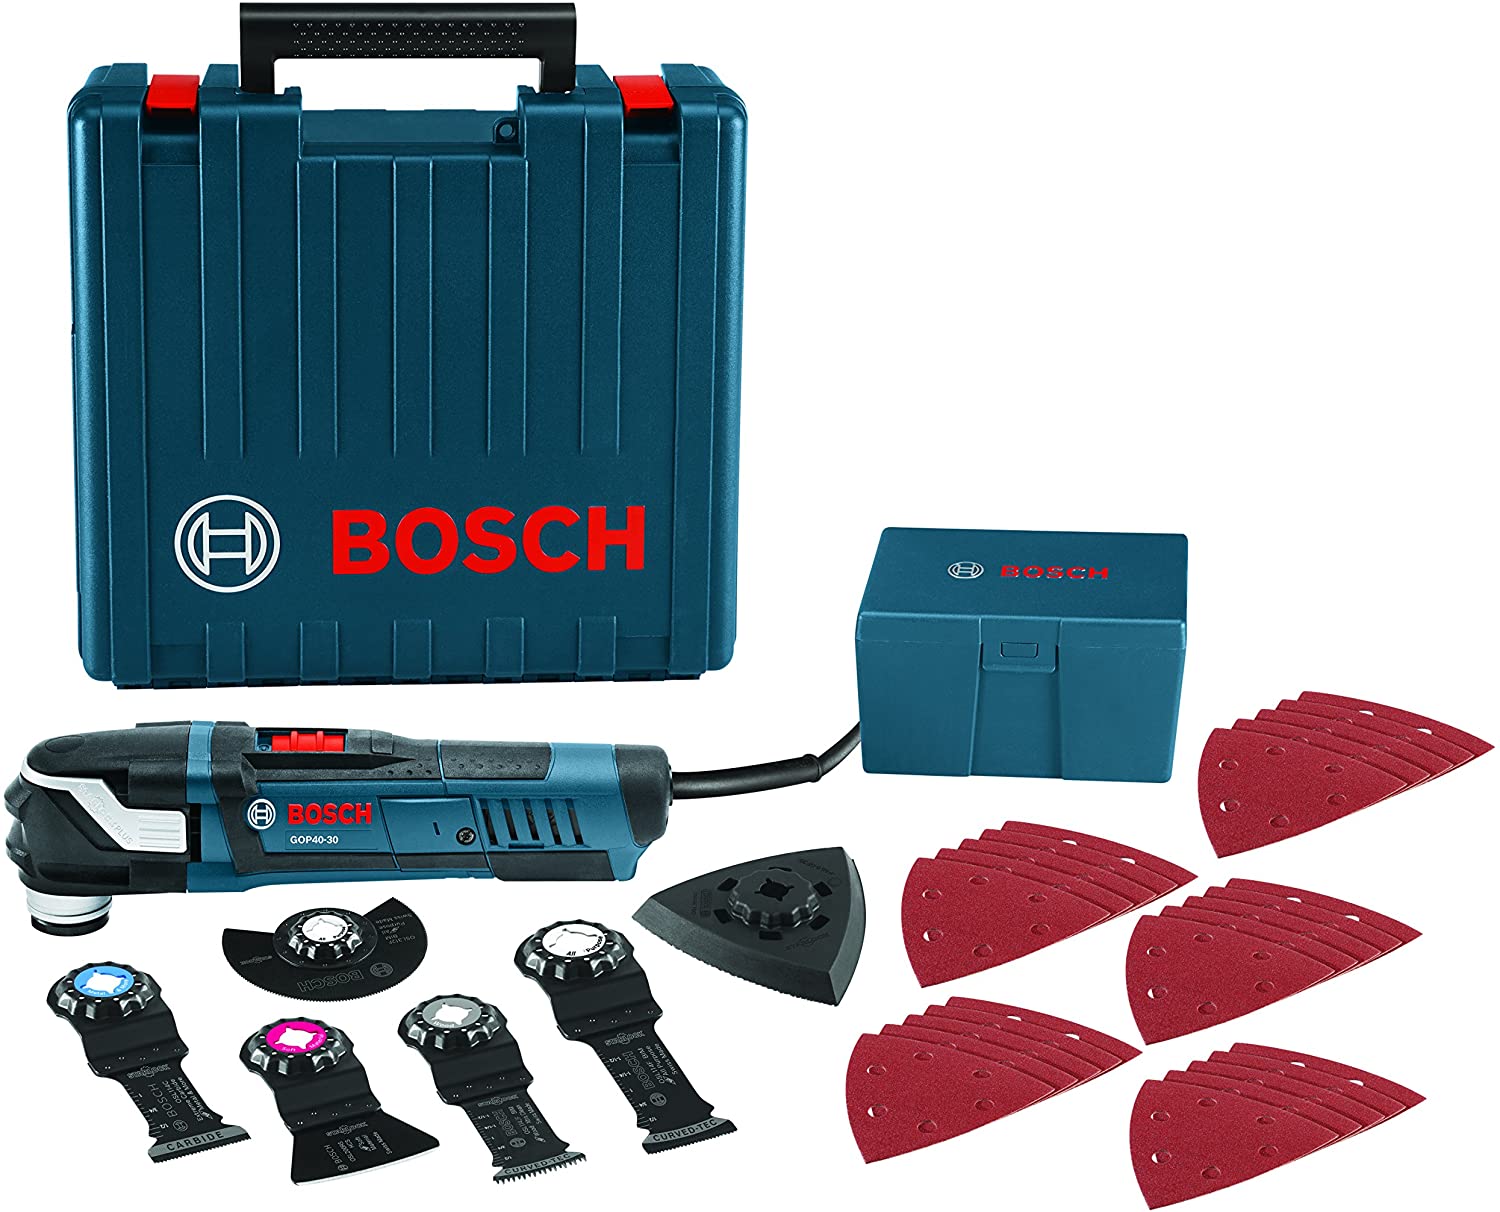 Bosch Multi-Tool Category